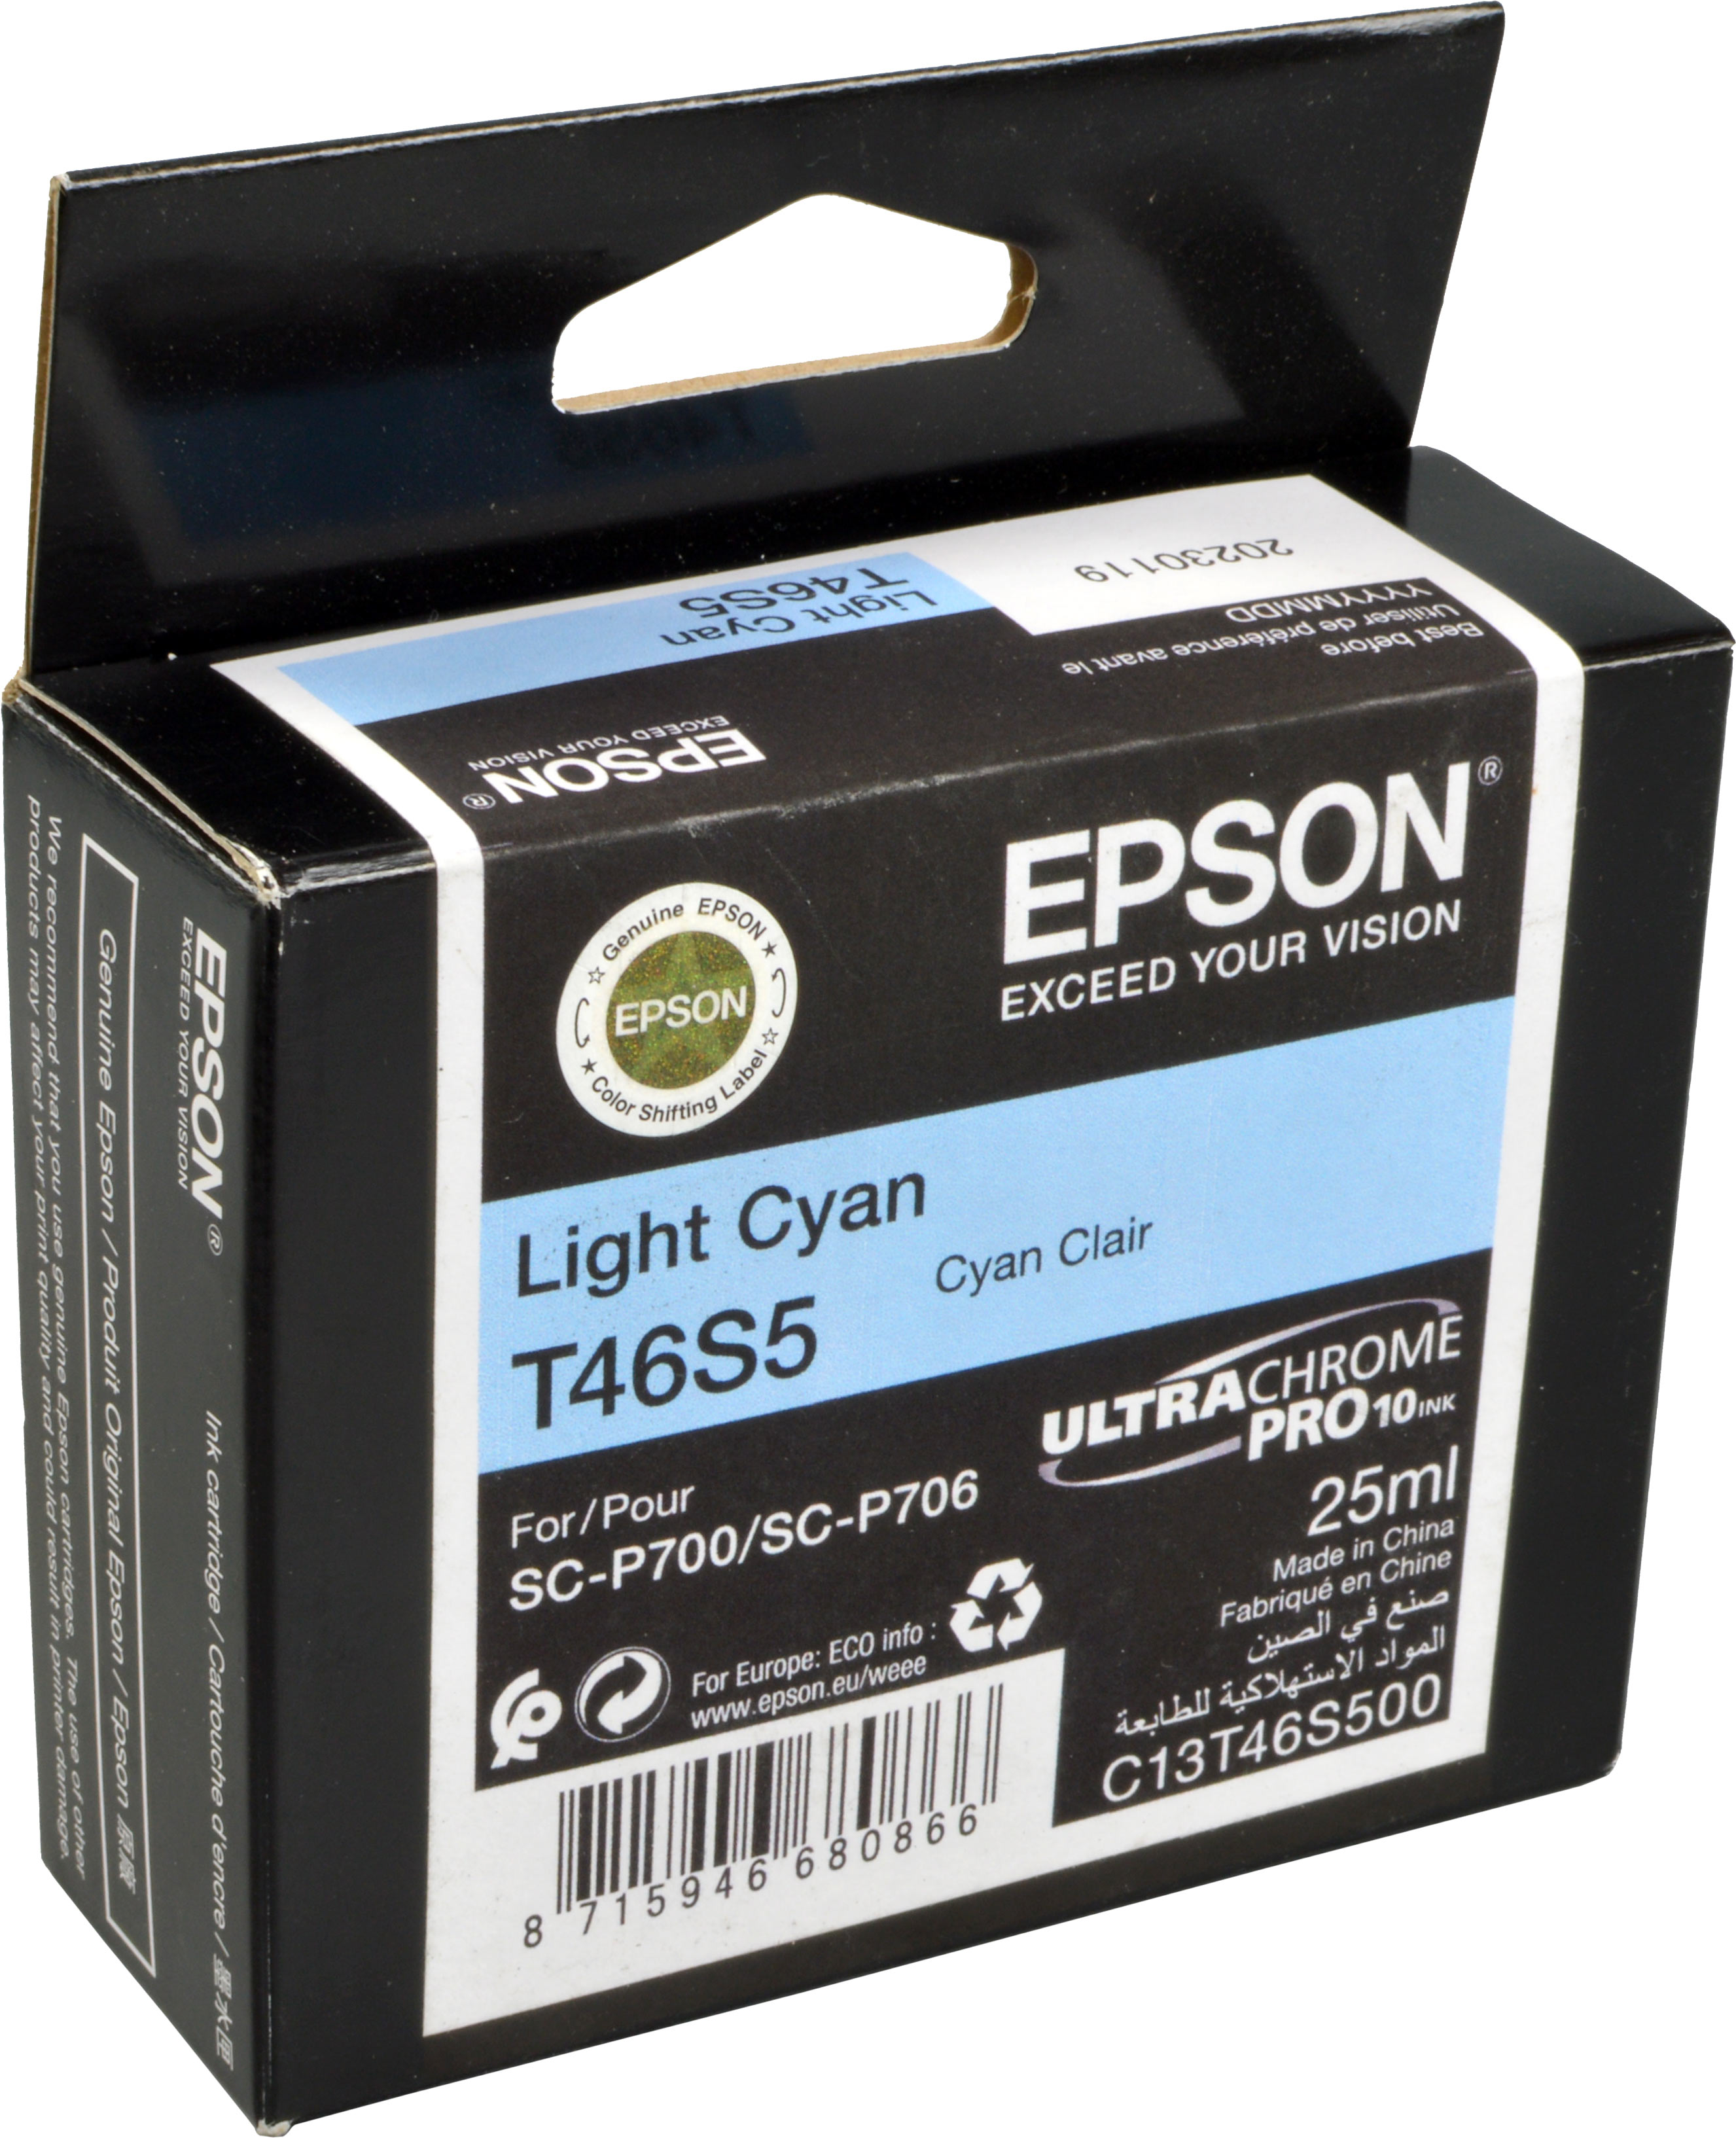 Epson Tinte C13T46S500  T46S5  light cyan